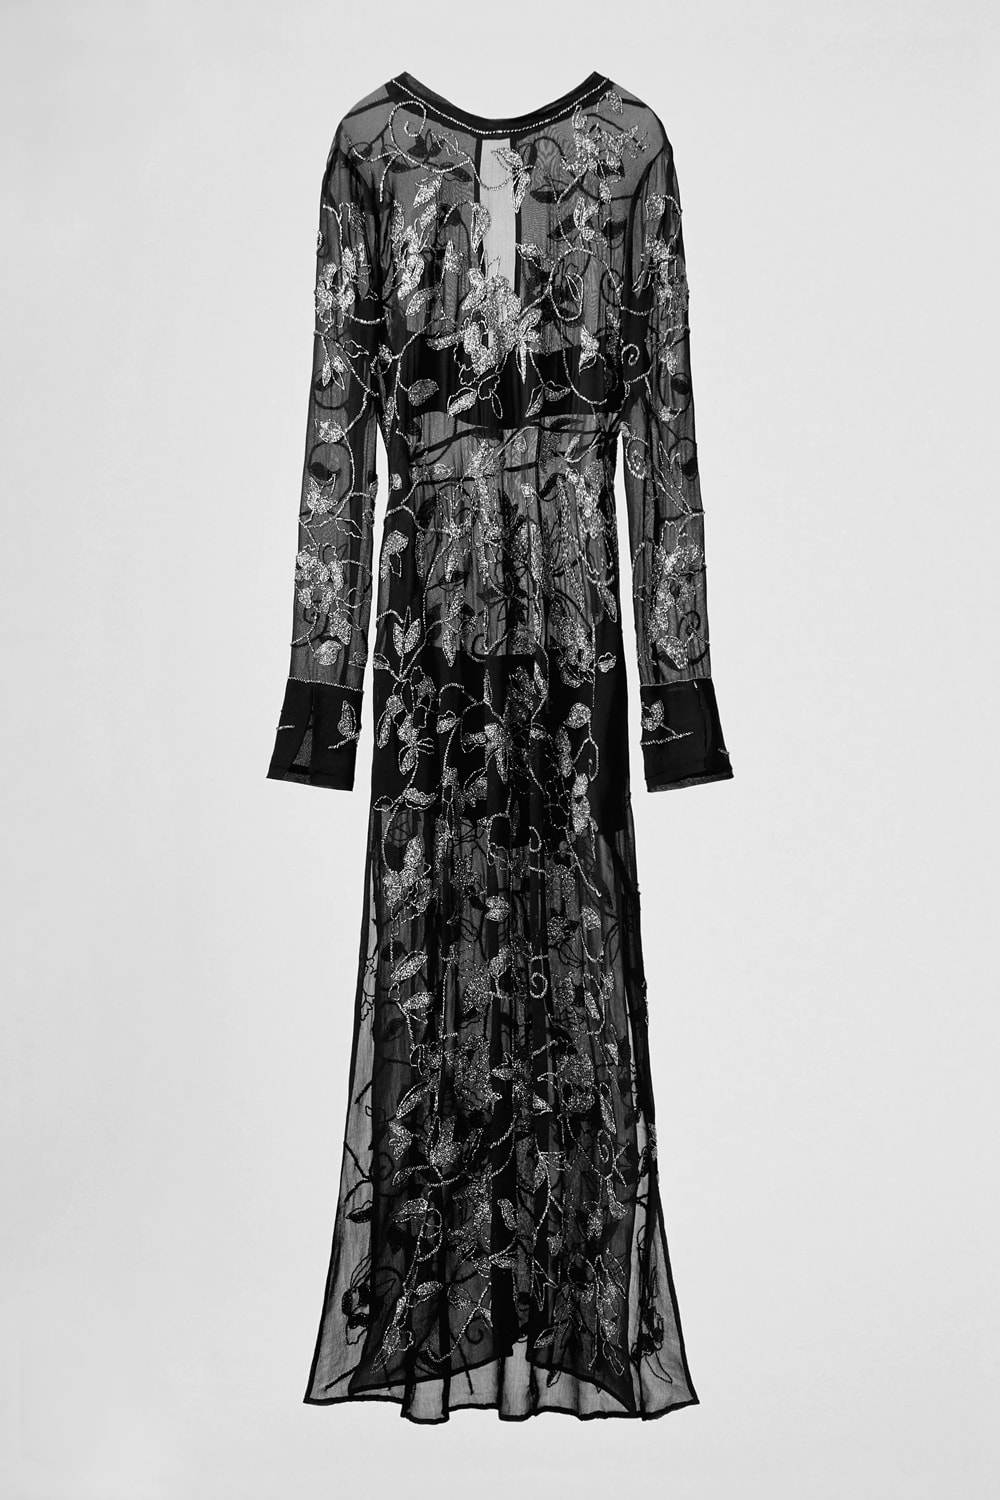 Zara Special Edition kolekcija crne haljine 2022.